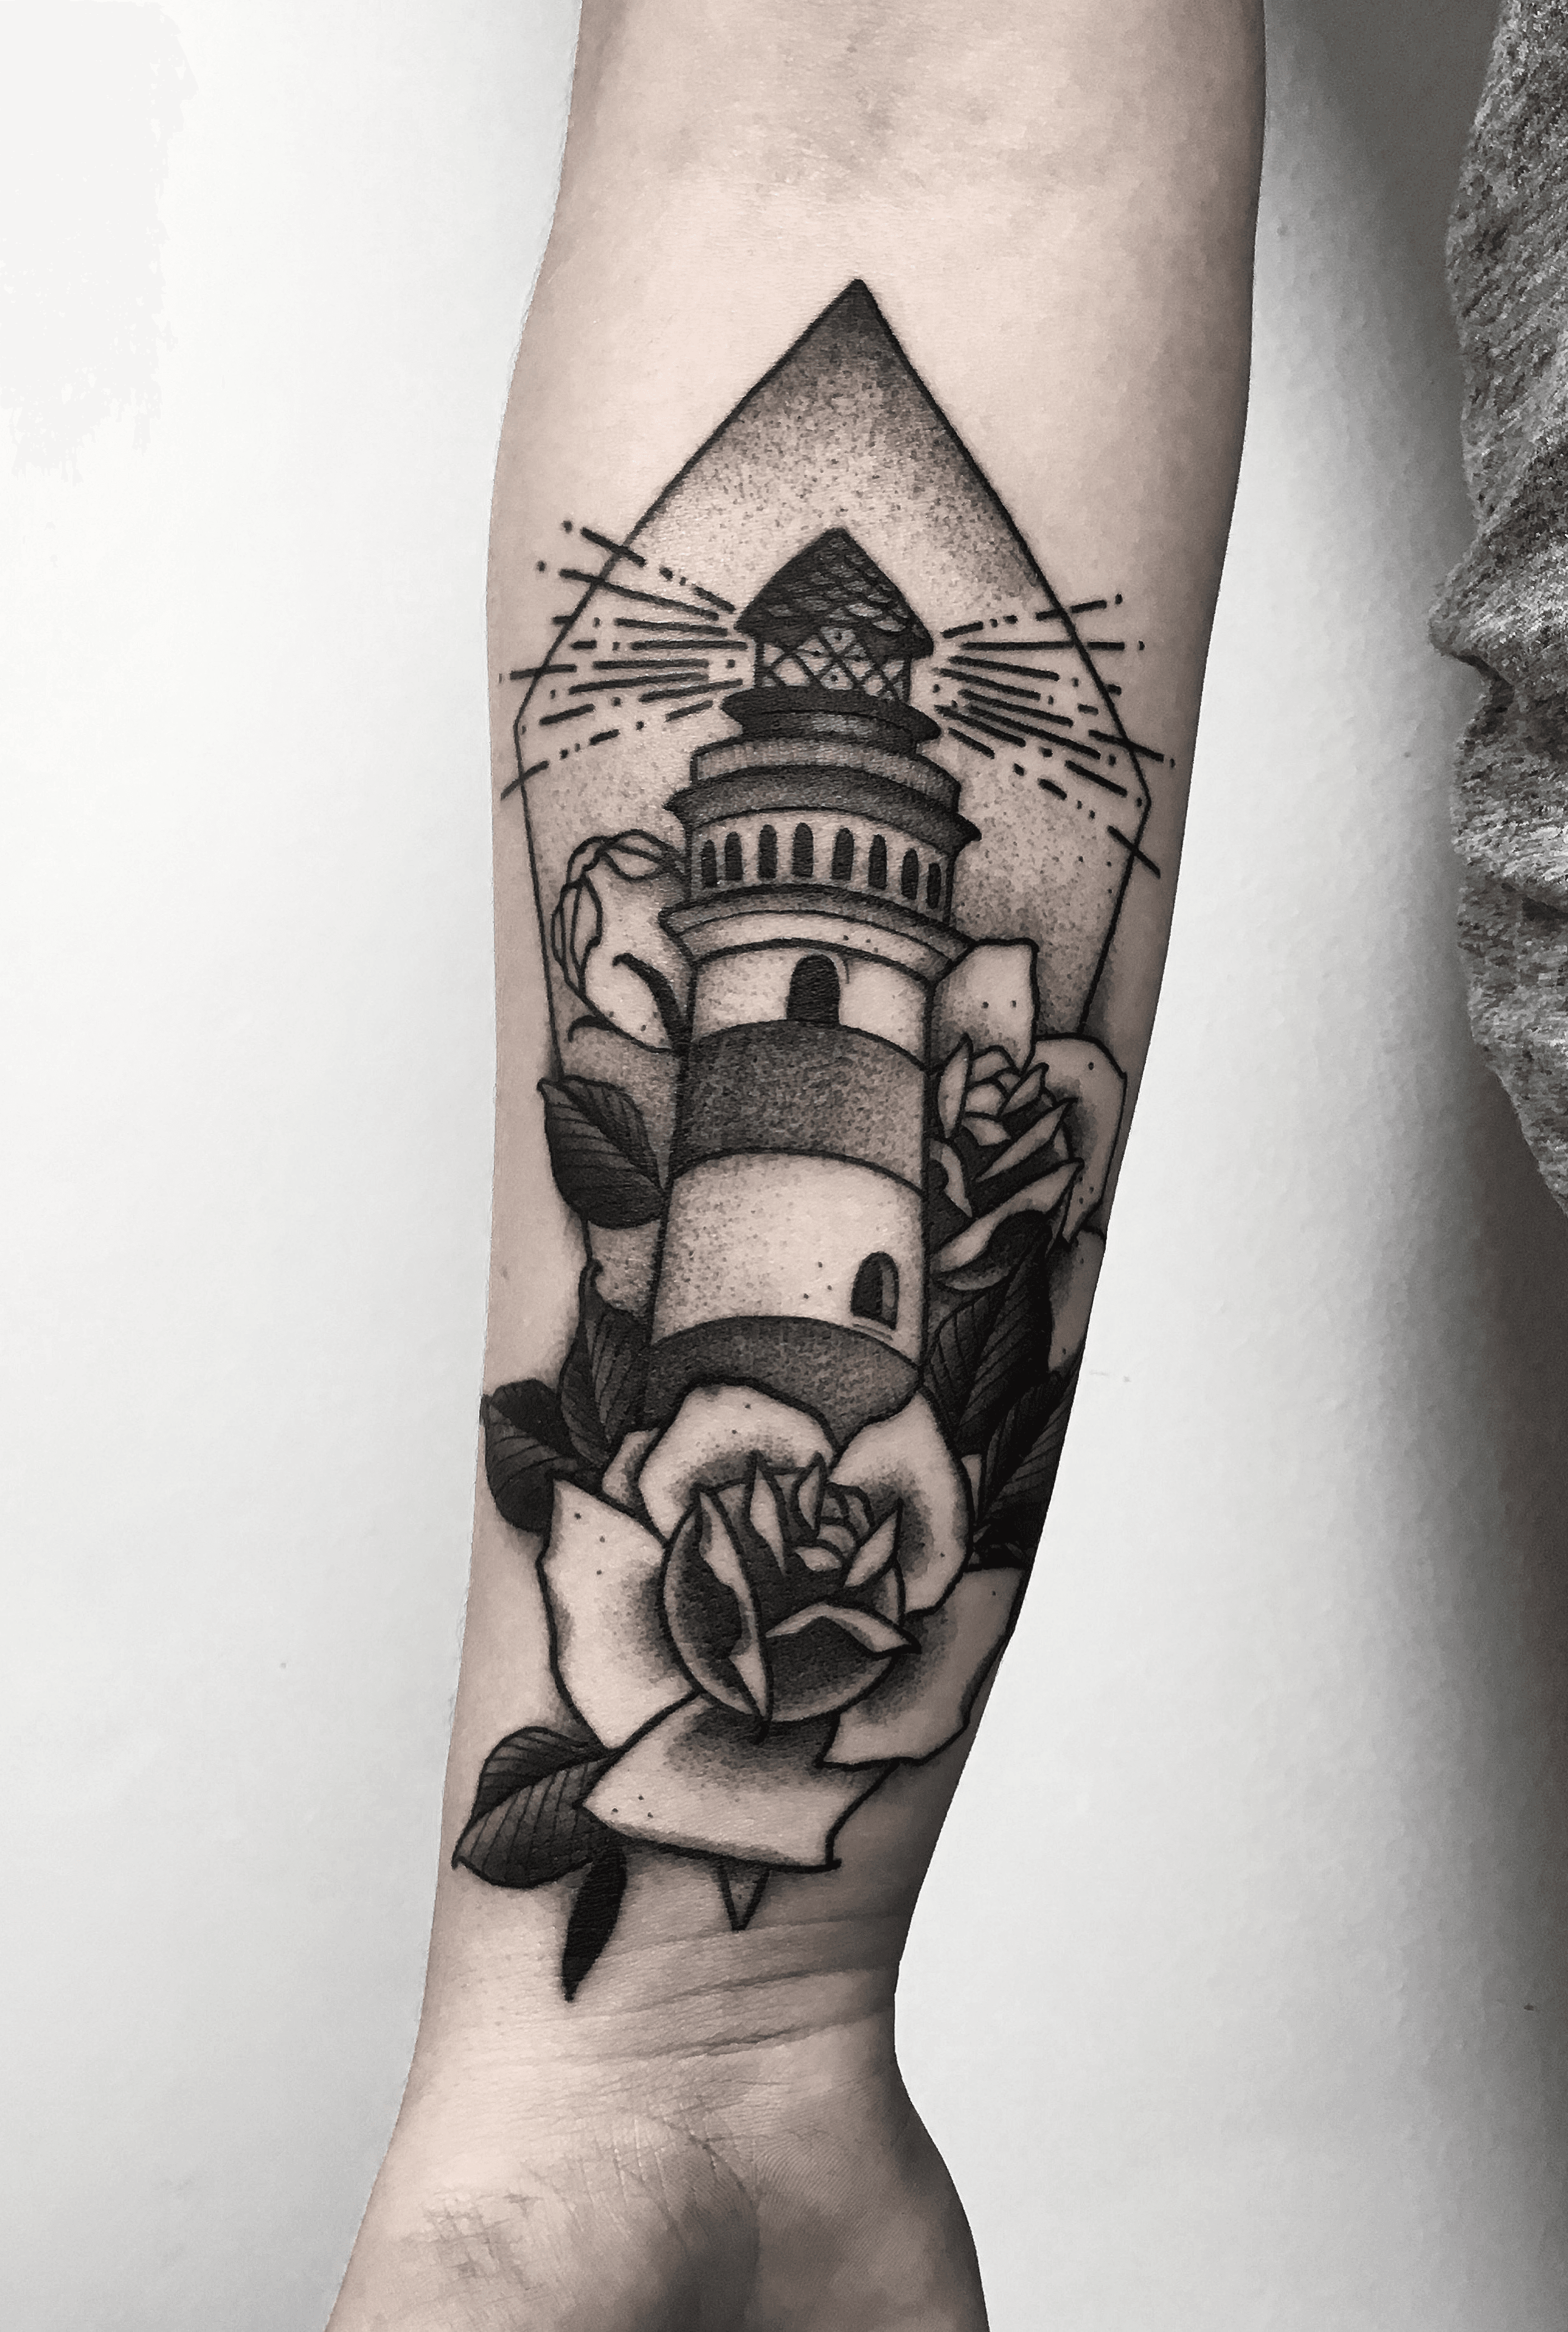 Bogia Nen Tattoo  Small lighthouse  Facebook